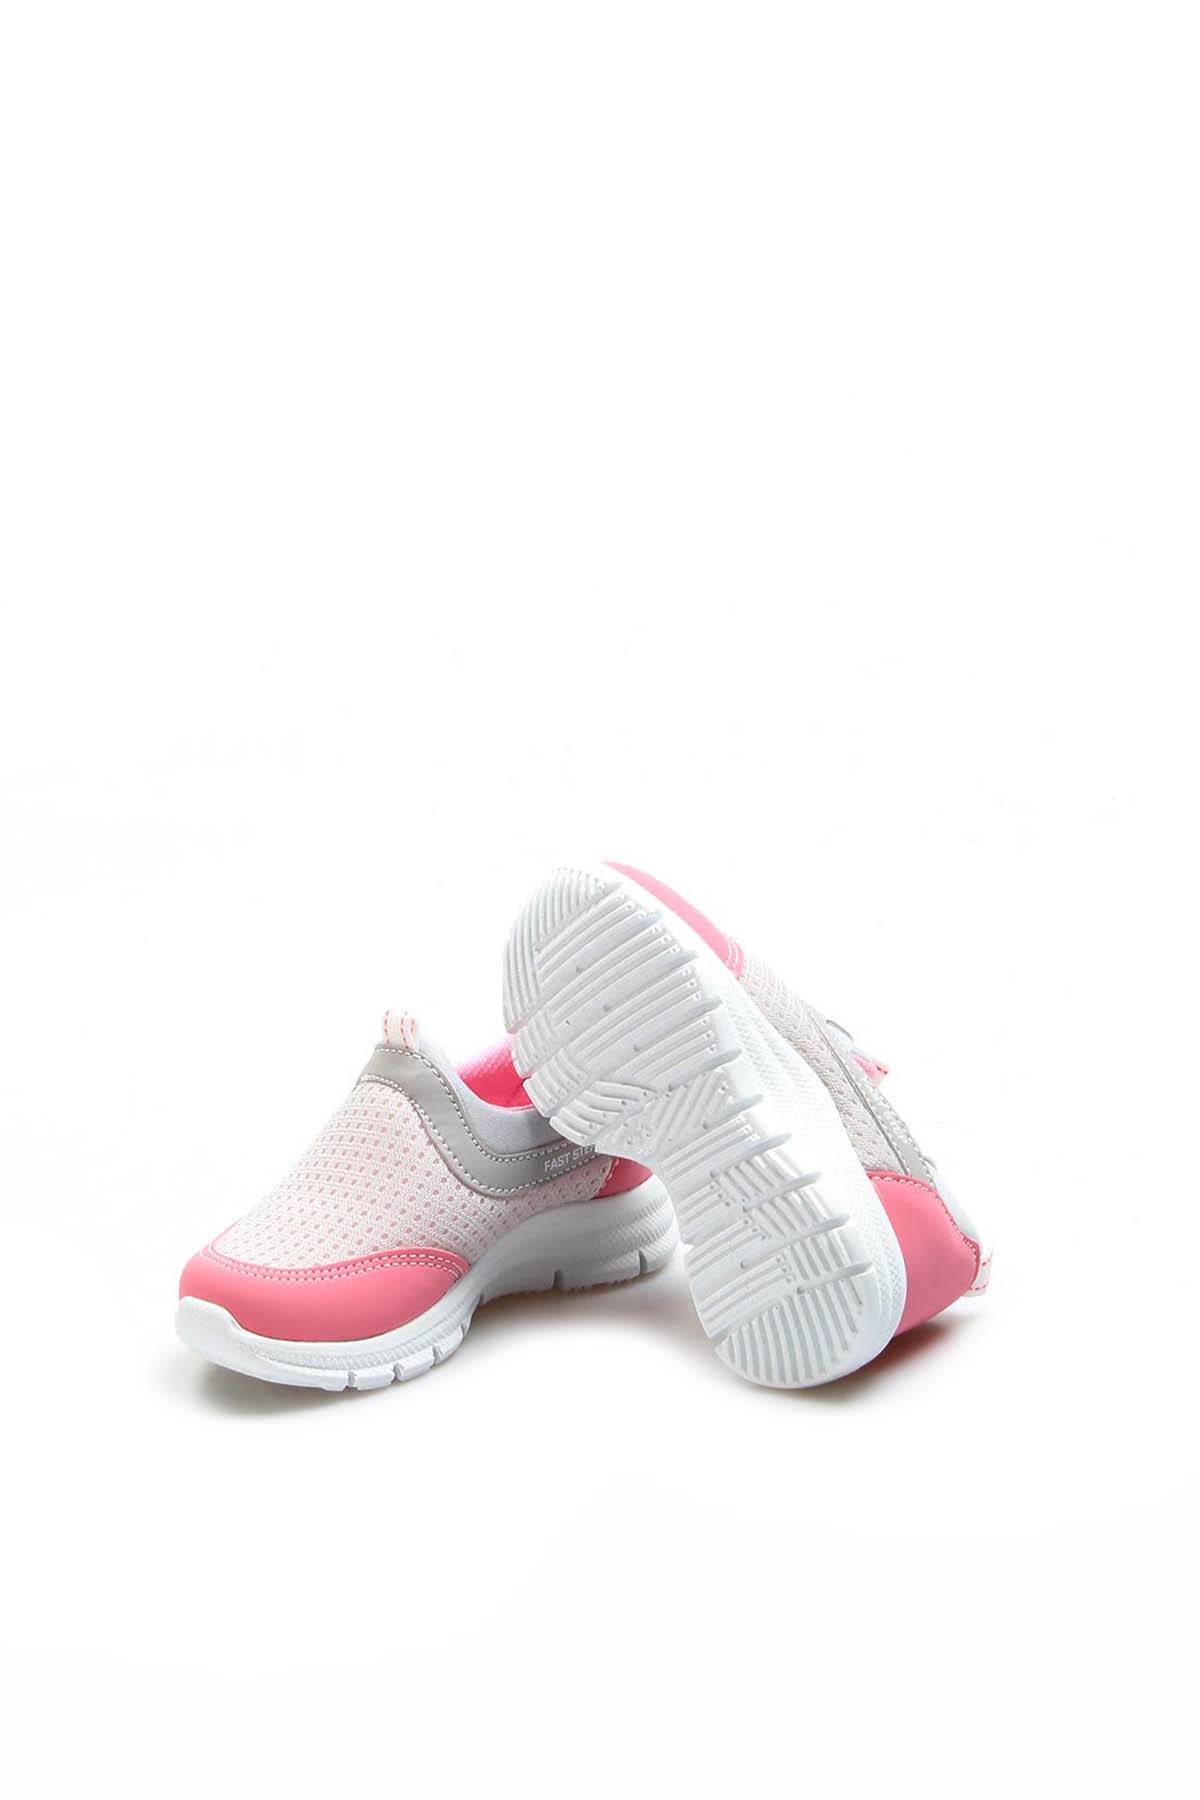 Fast Step Kids Unisex Boys Sport Shoes Pink 868BA1006